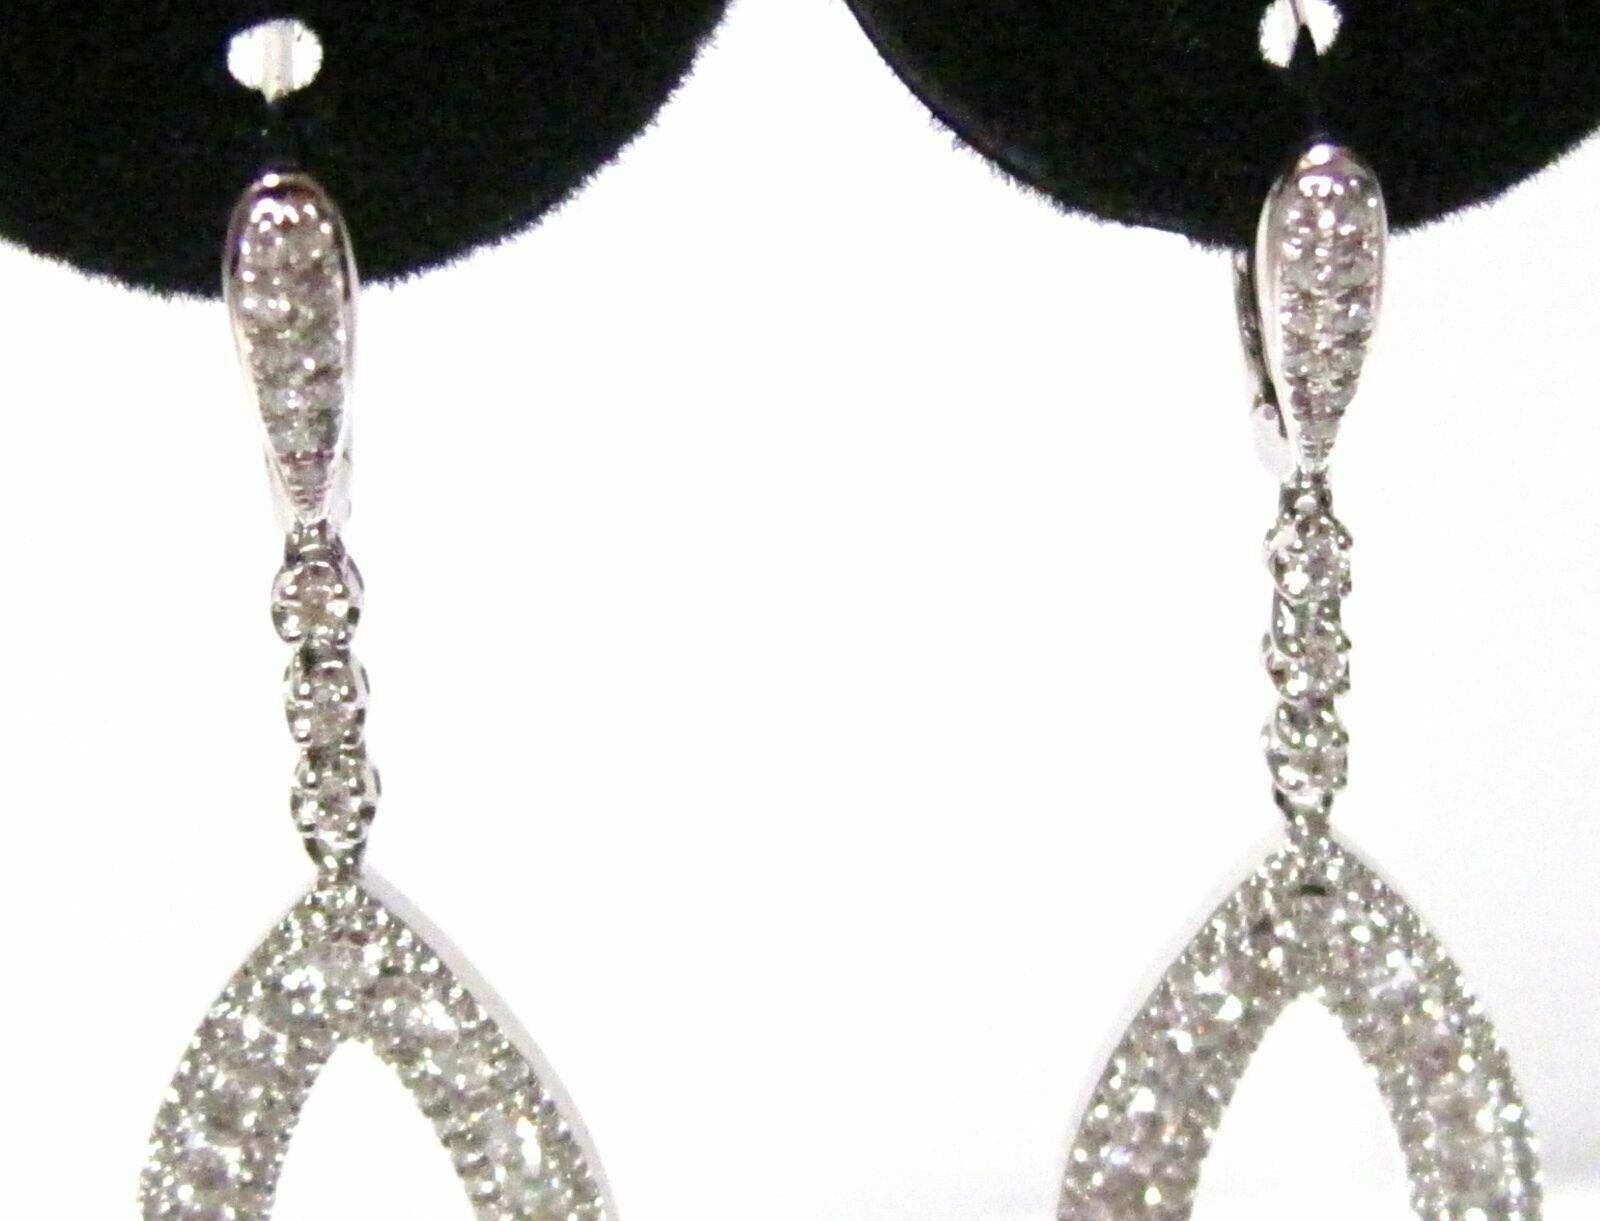 1.70 TCW Round Diamond Pear Shape Drop/Dangling Earrings F-G VVS2 18k White Gold